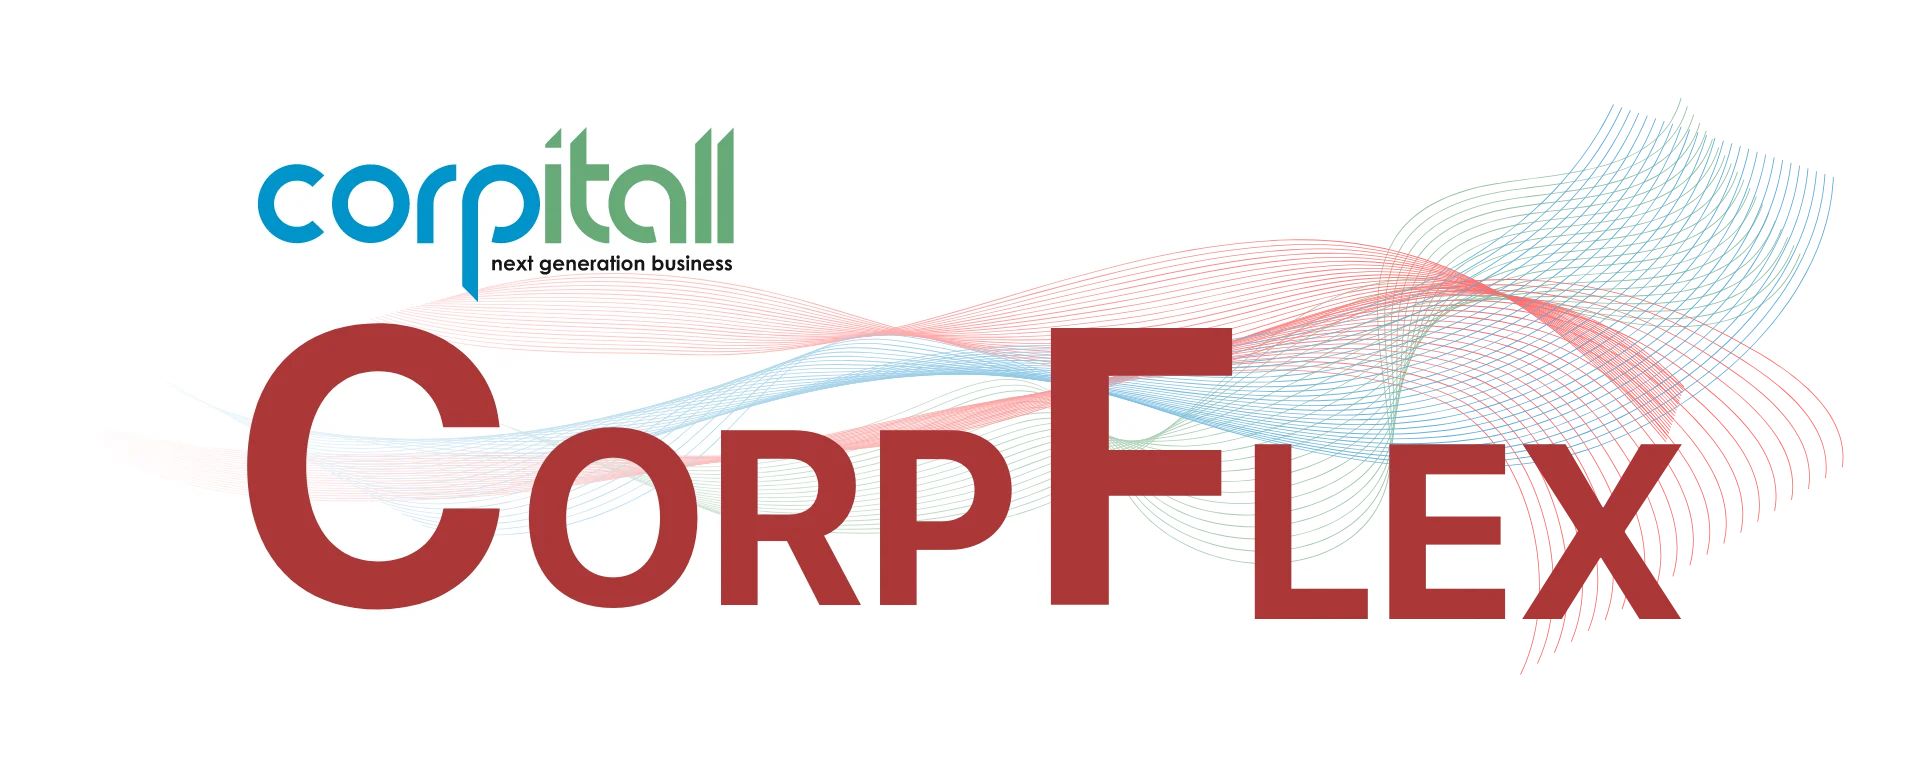 CorpFlex Logo